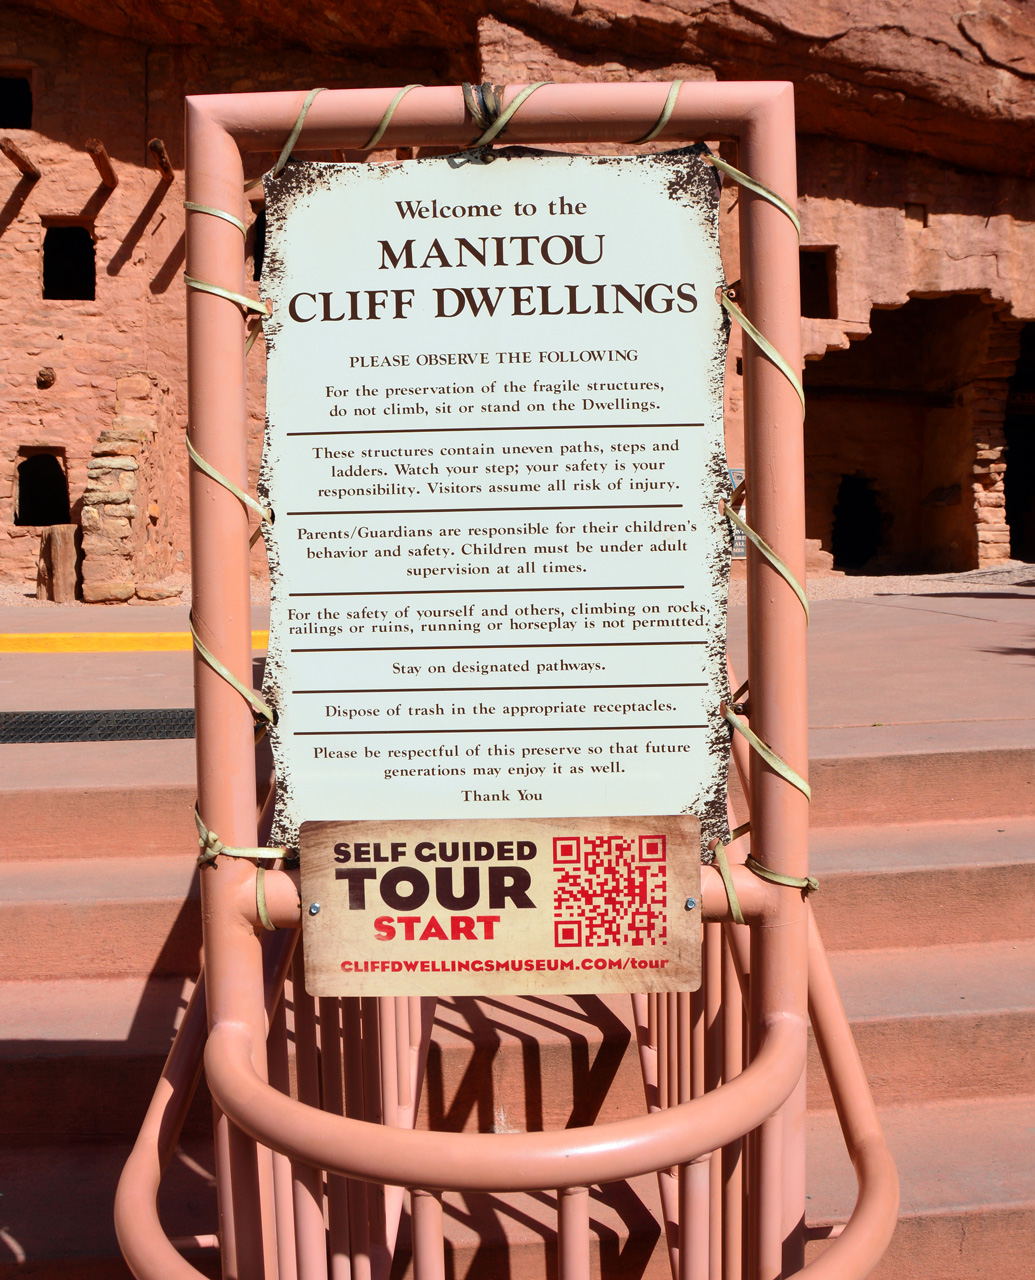 2015-09-23, 008, Manitou Cliff Dwellings